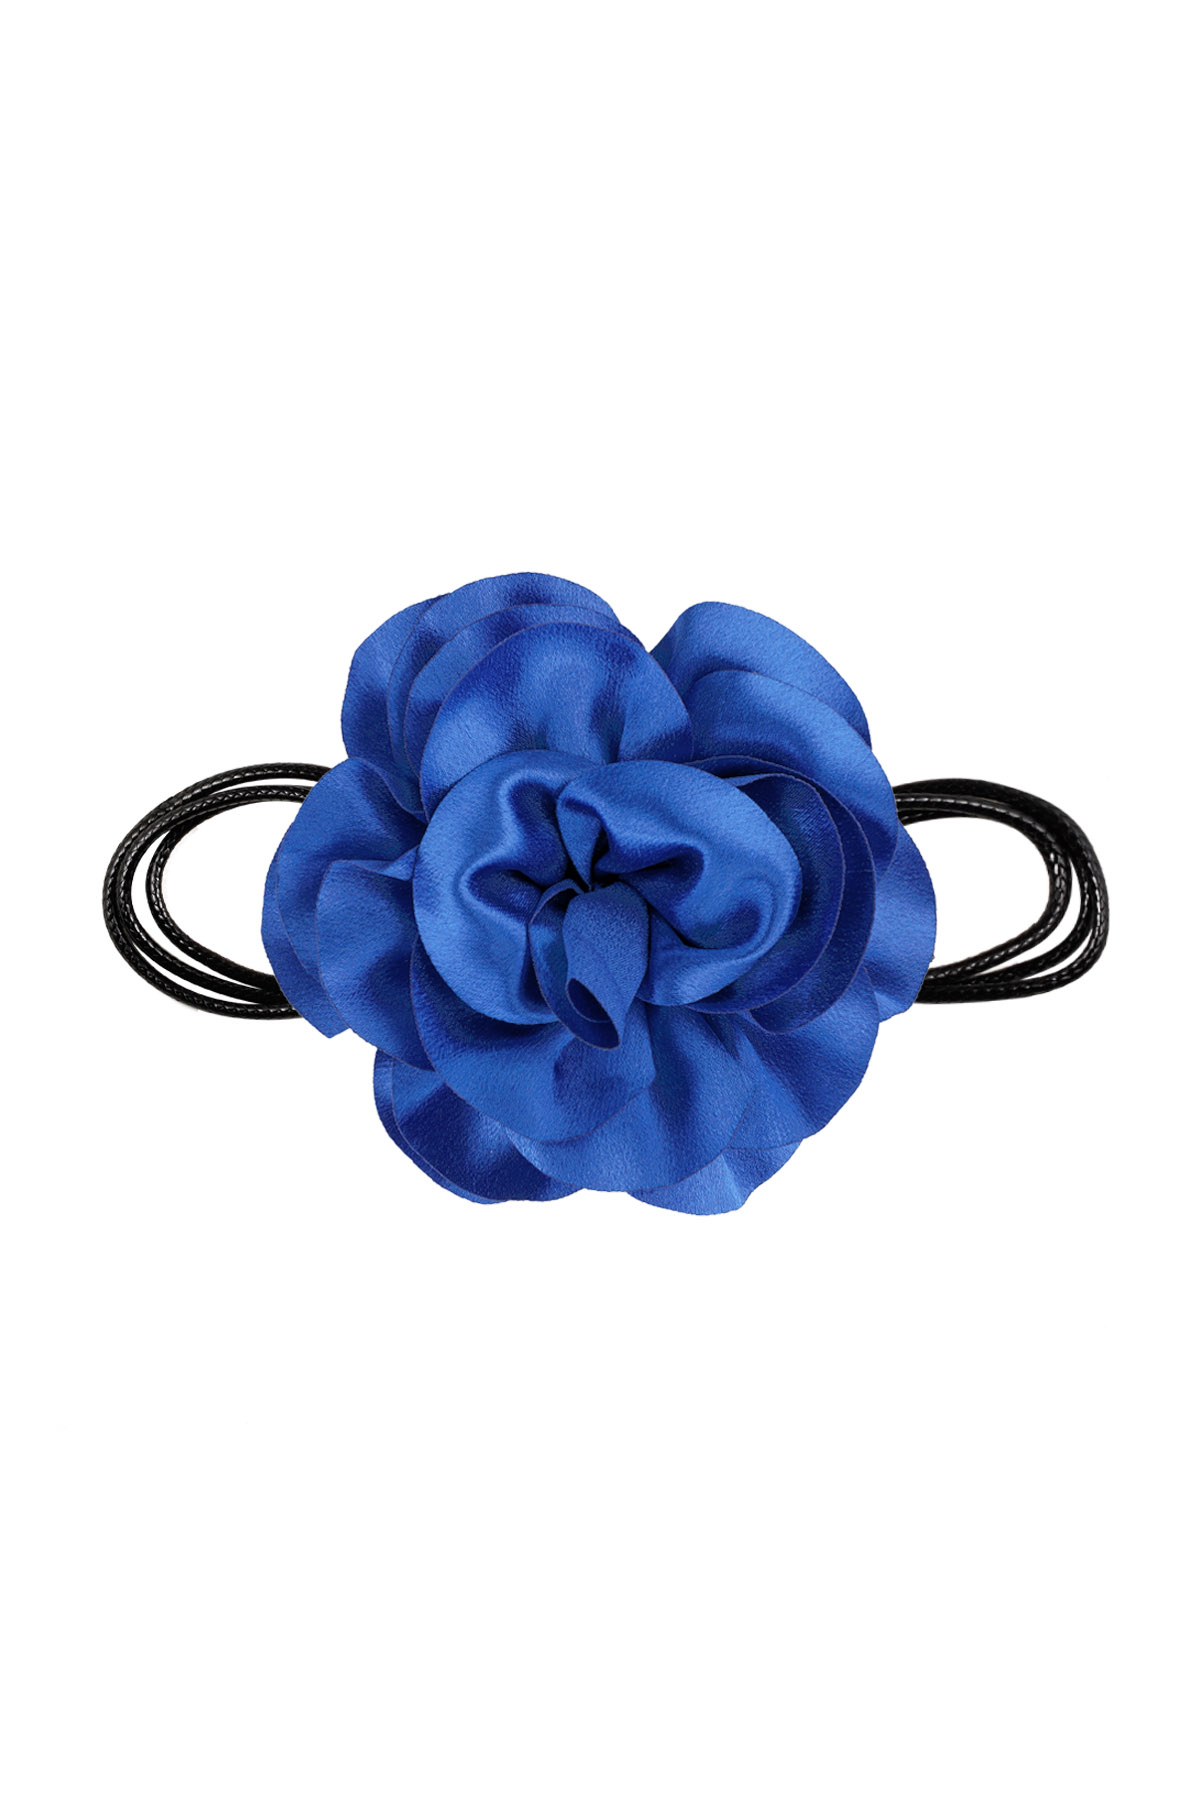 Collier corde fleur brillant - bleu vif